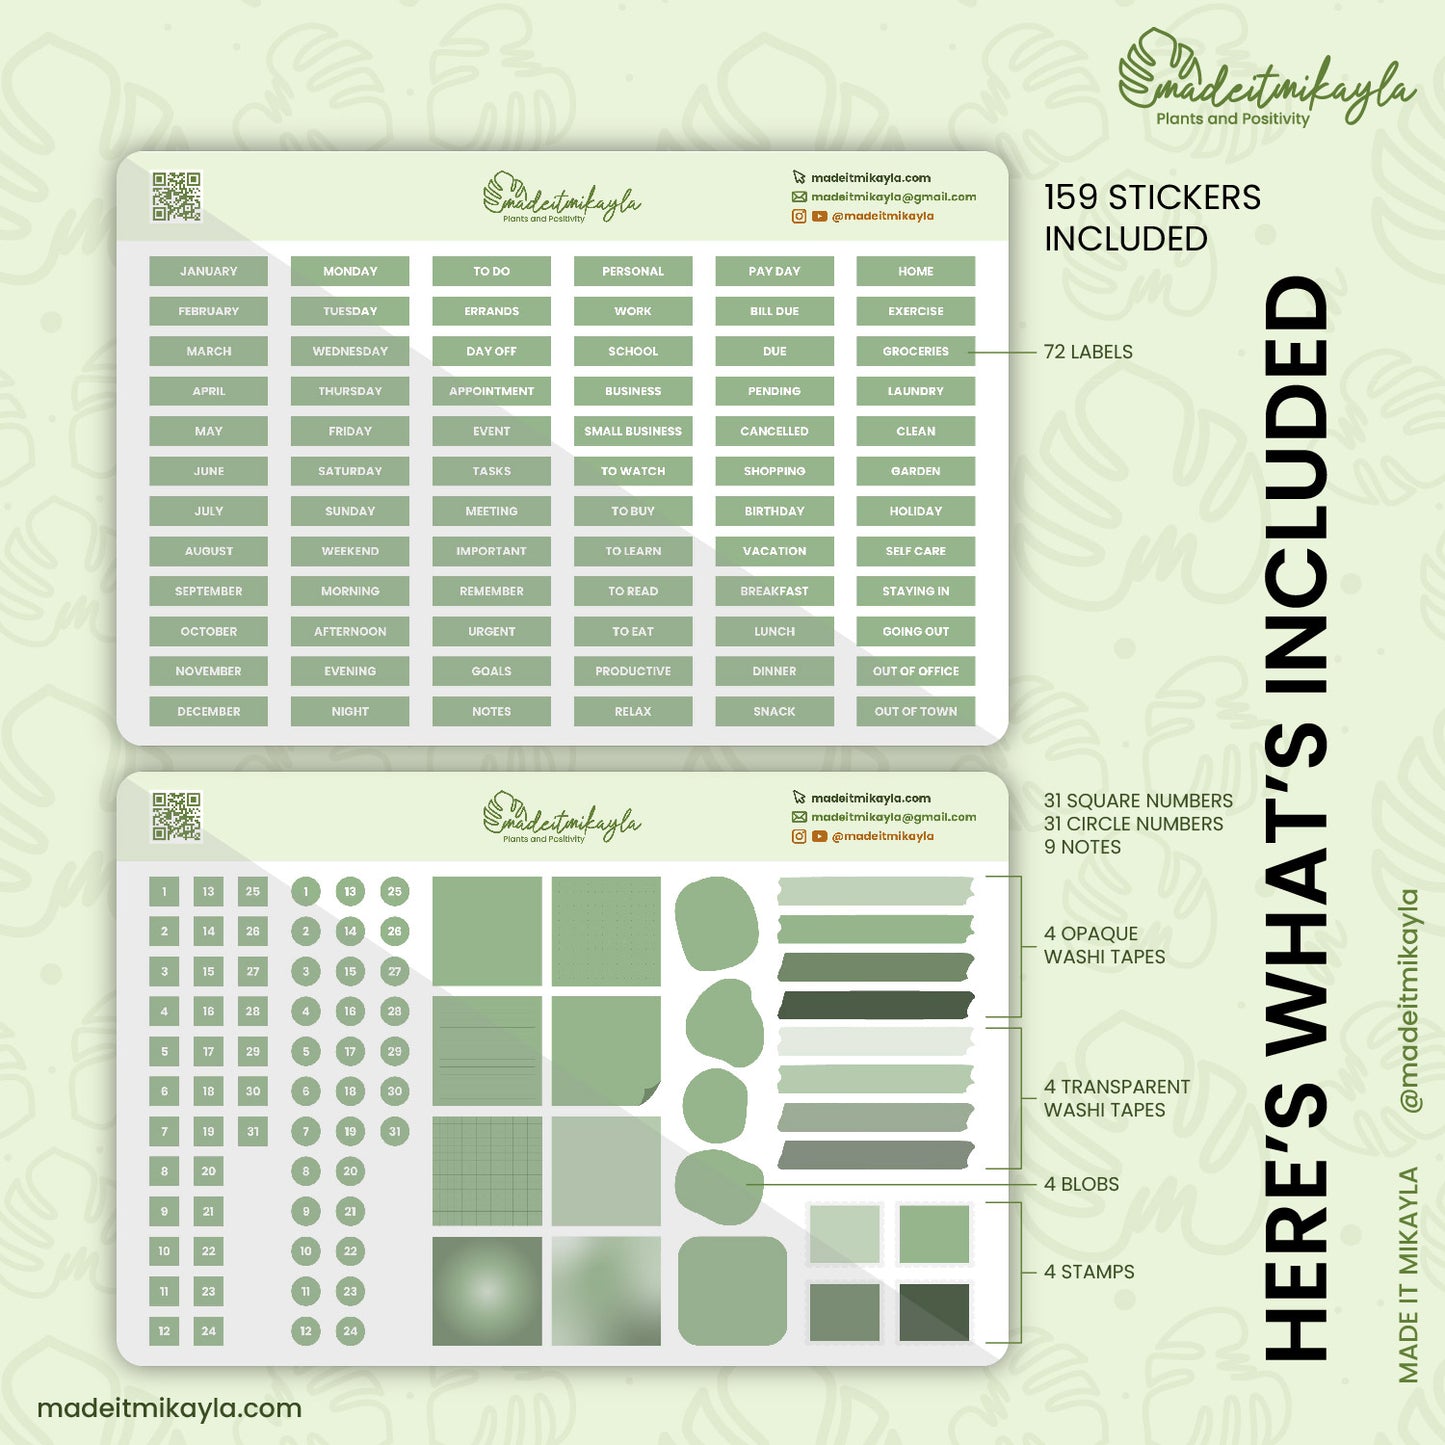 Green Simple Daily Digital Stickers | MadeItMikayla